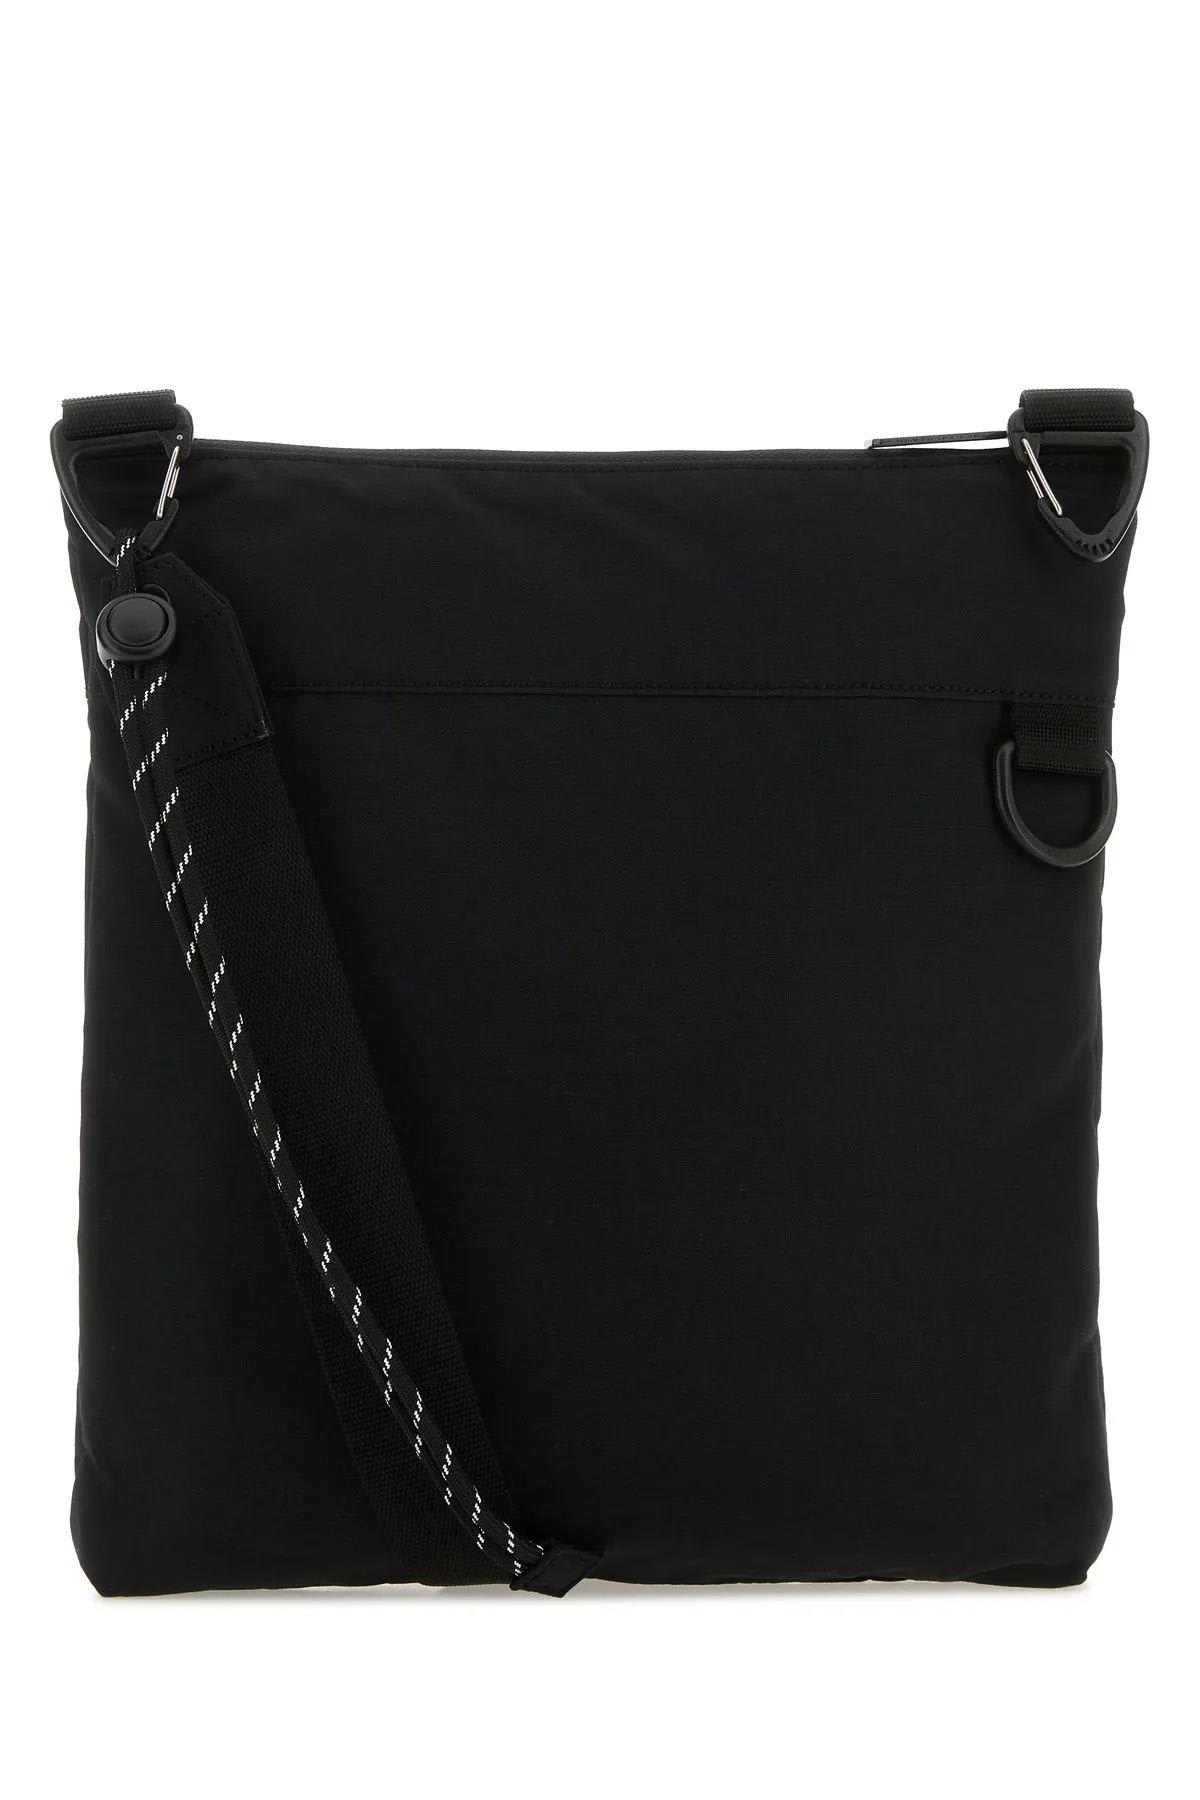 Shop Carhartt Black Cotton Blend Haste Strap Bag